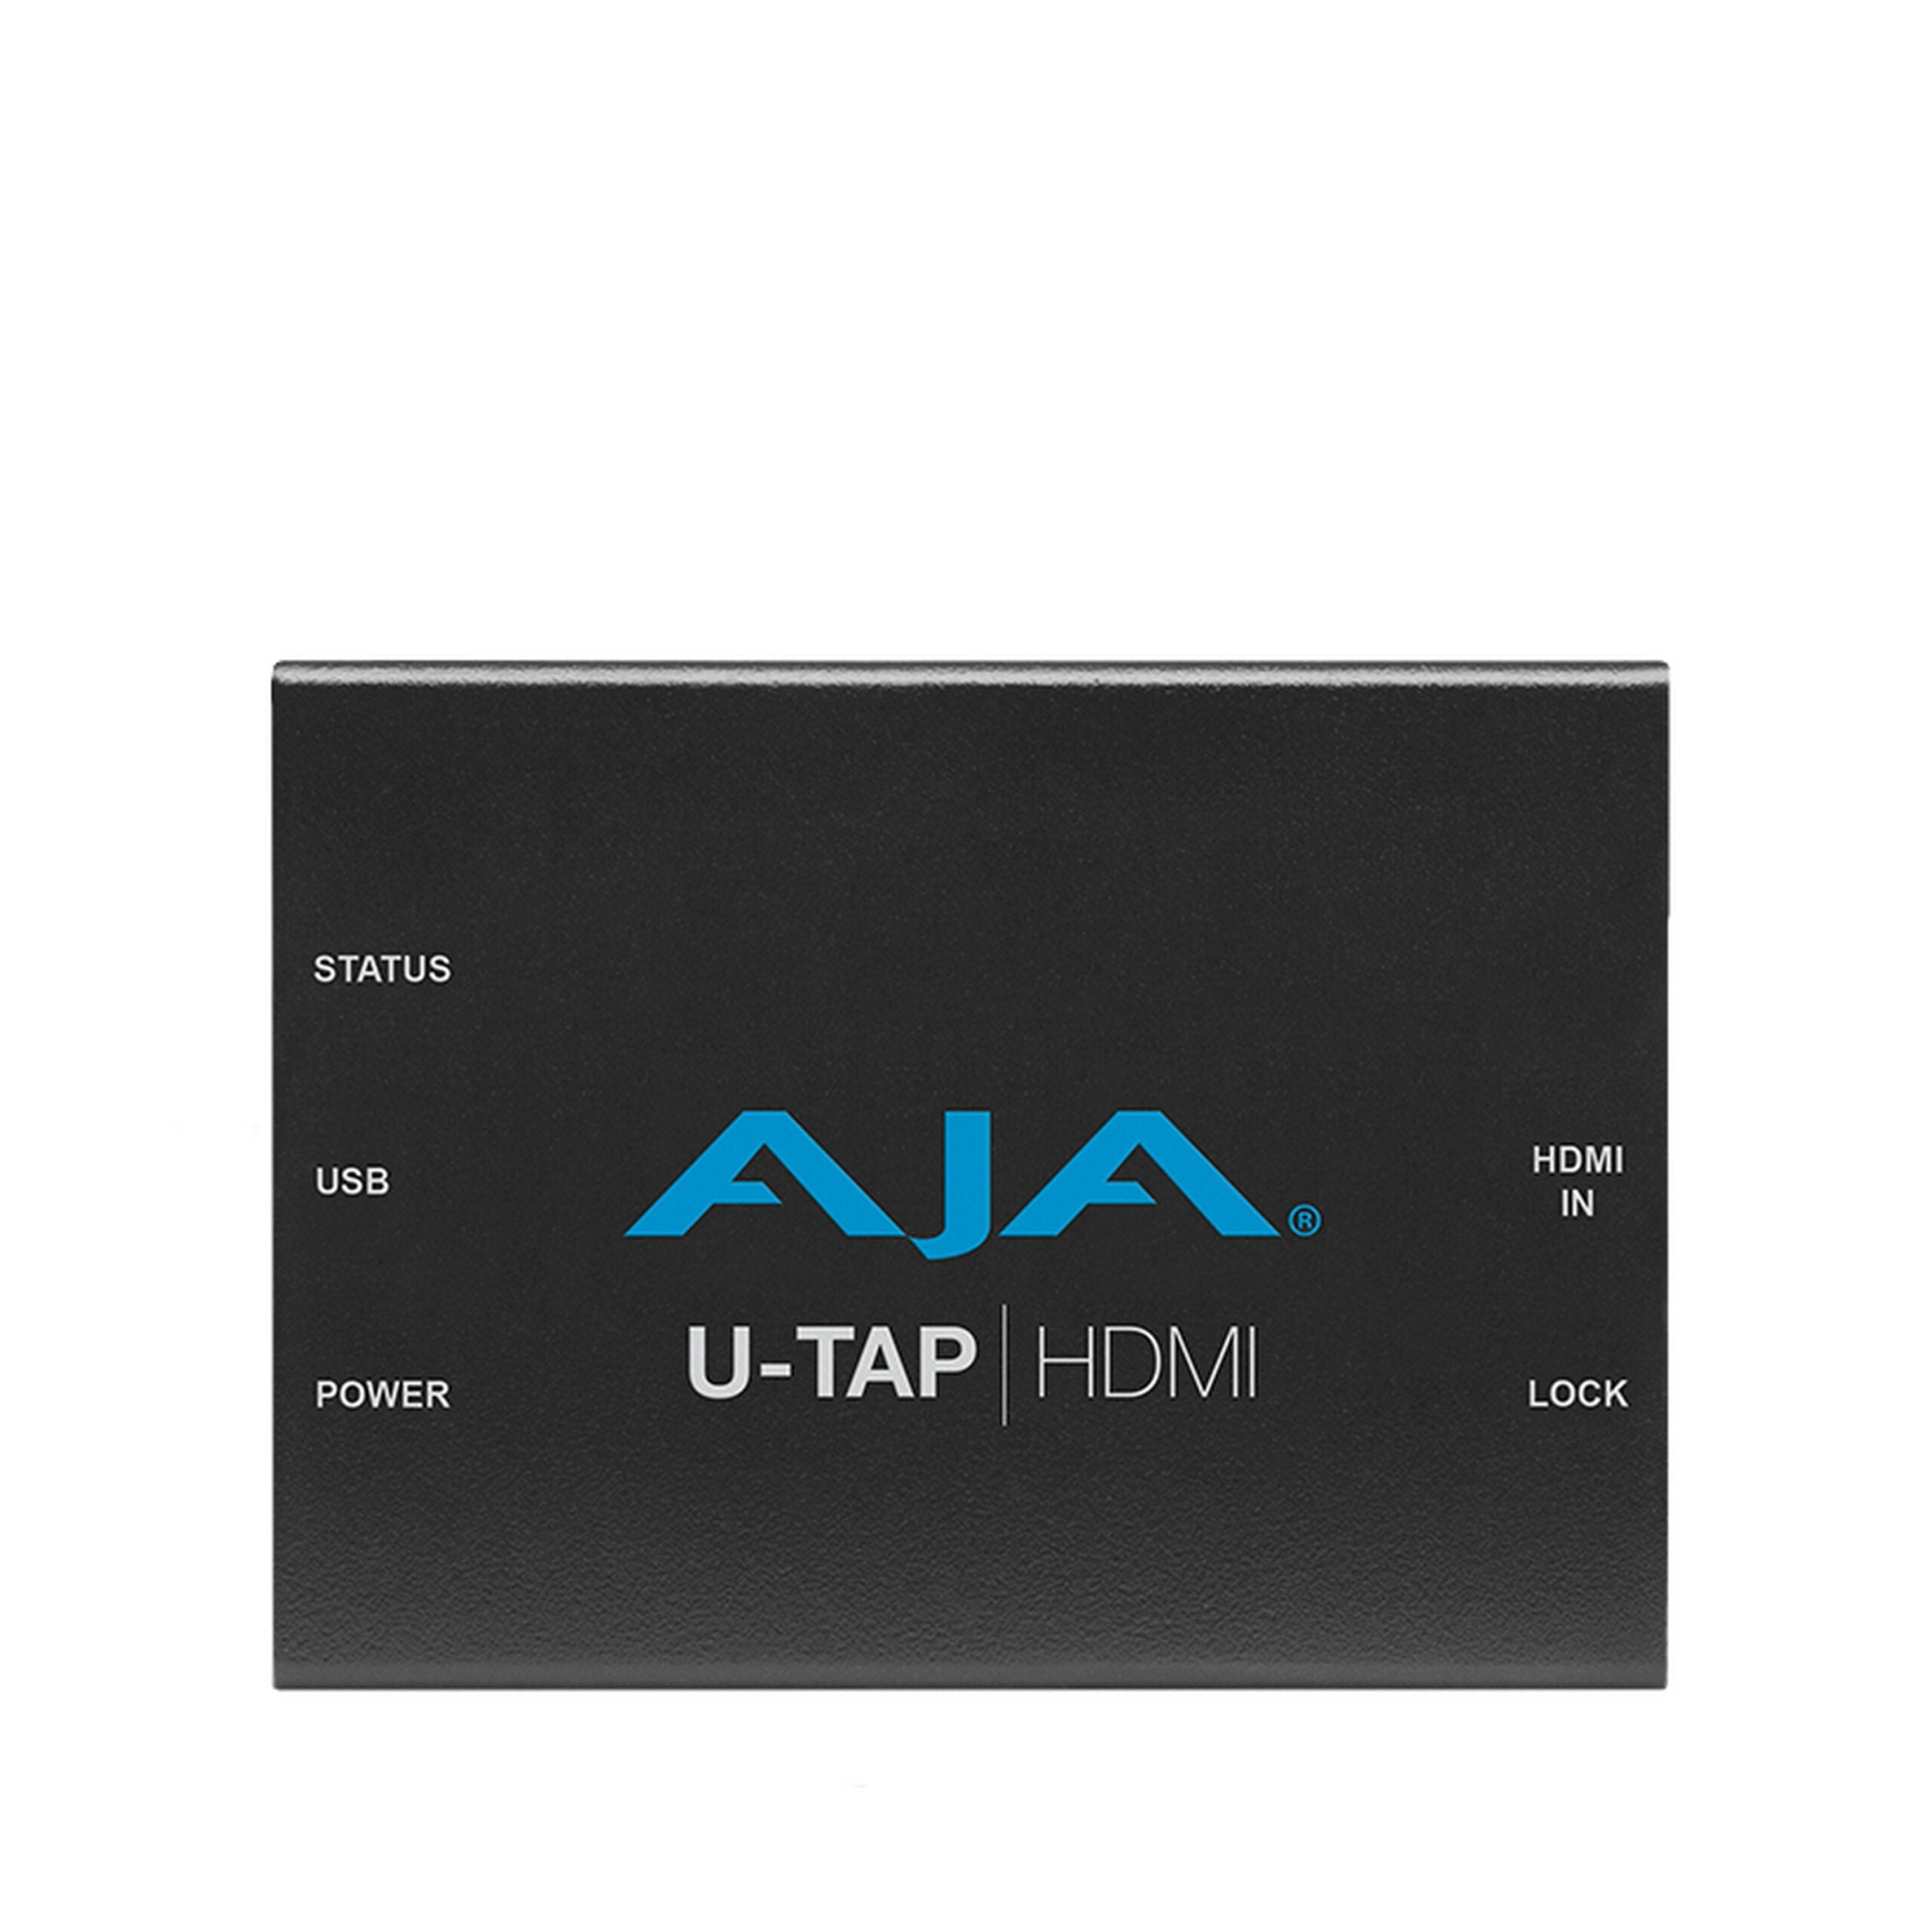 AJA U-TAP-HDMI HD/SD USB 3.0 Capture Device for Mac/Windows/Linux